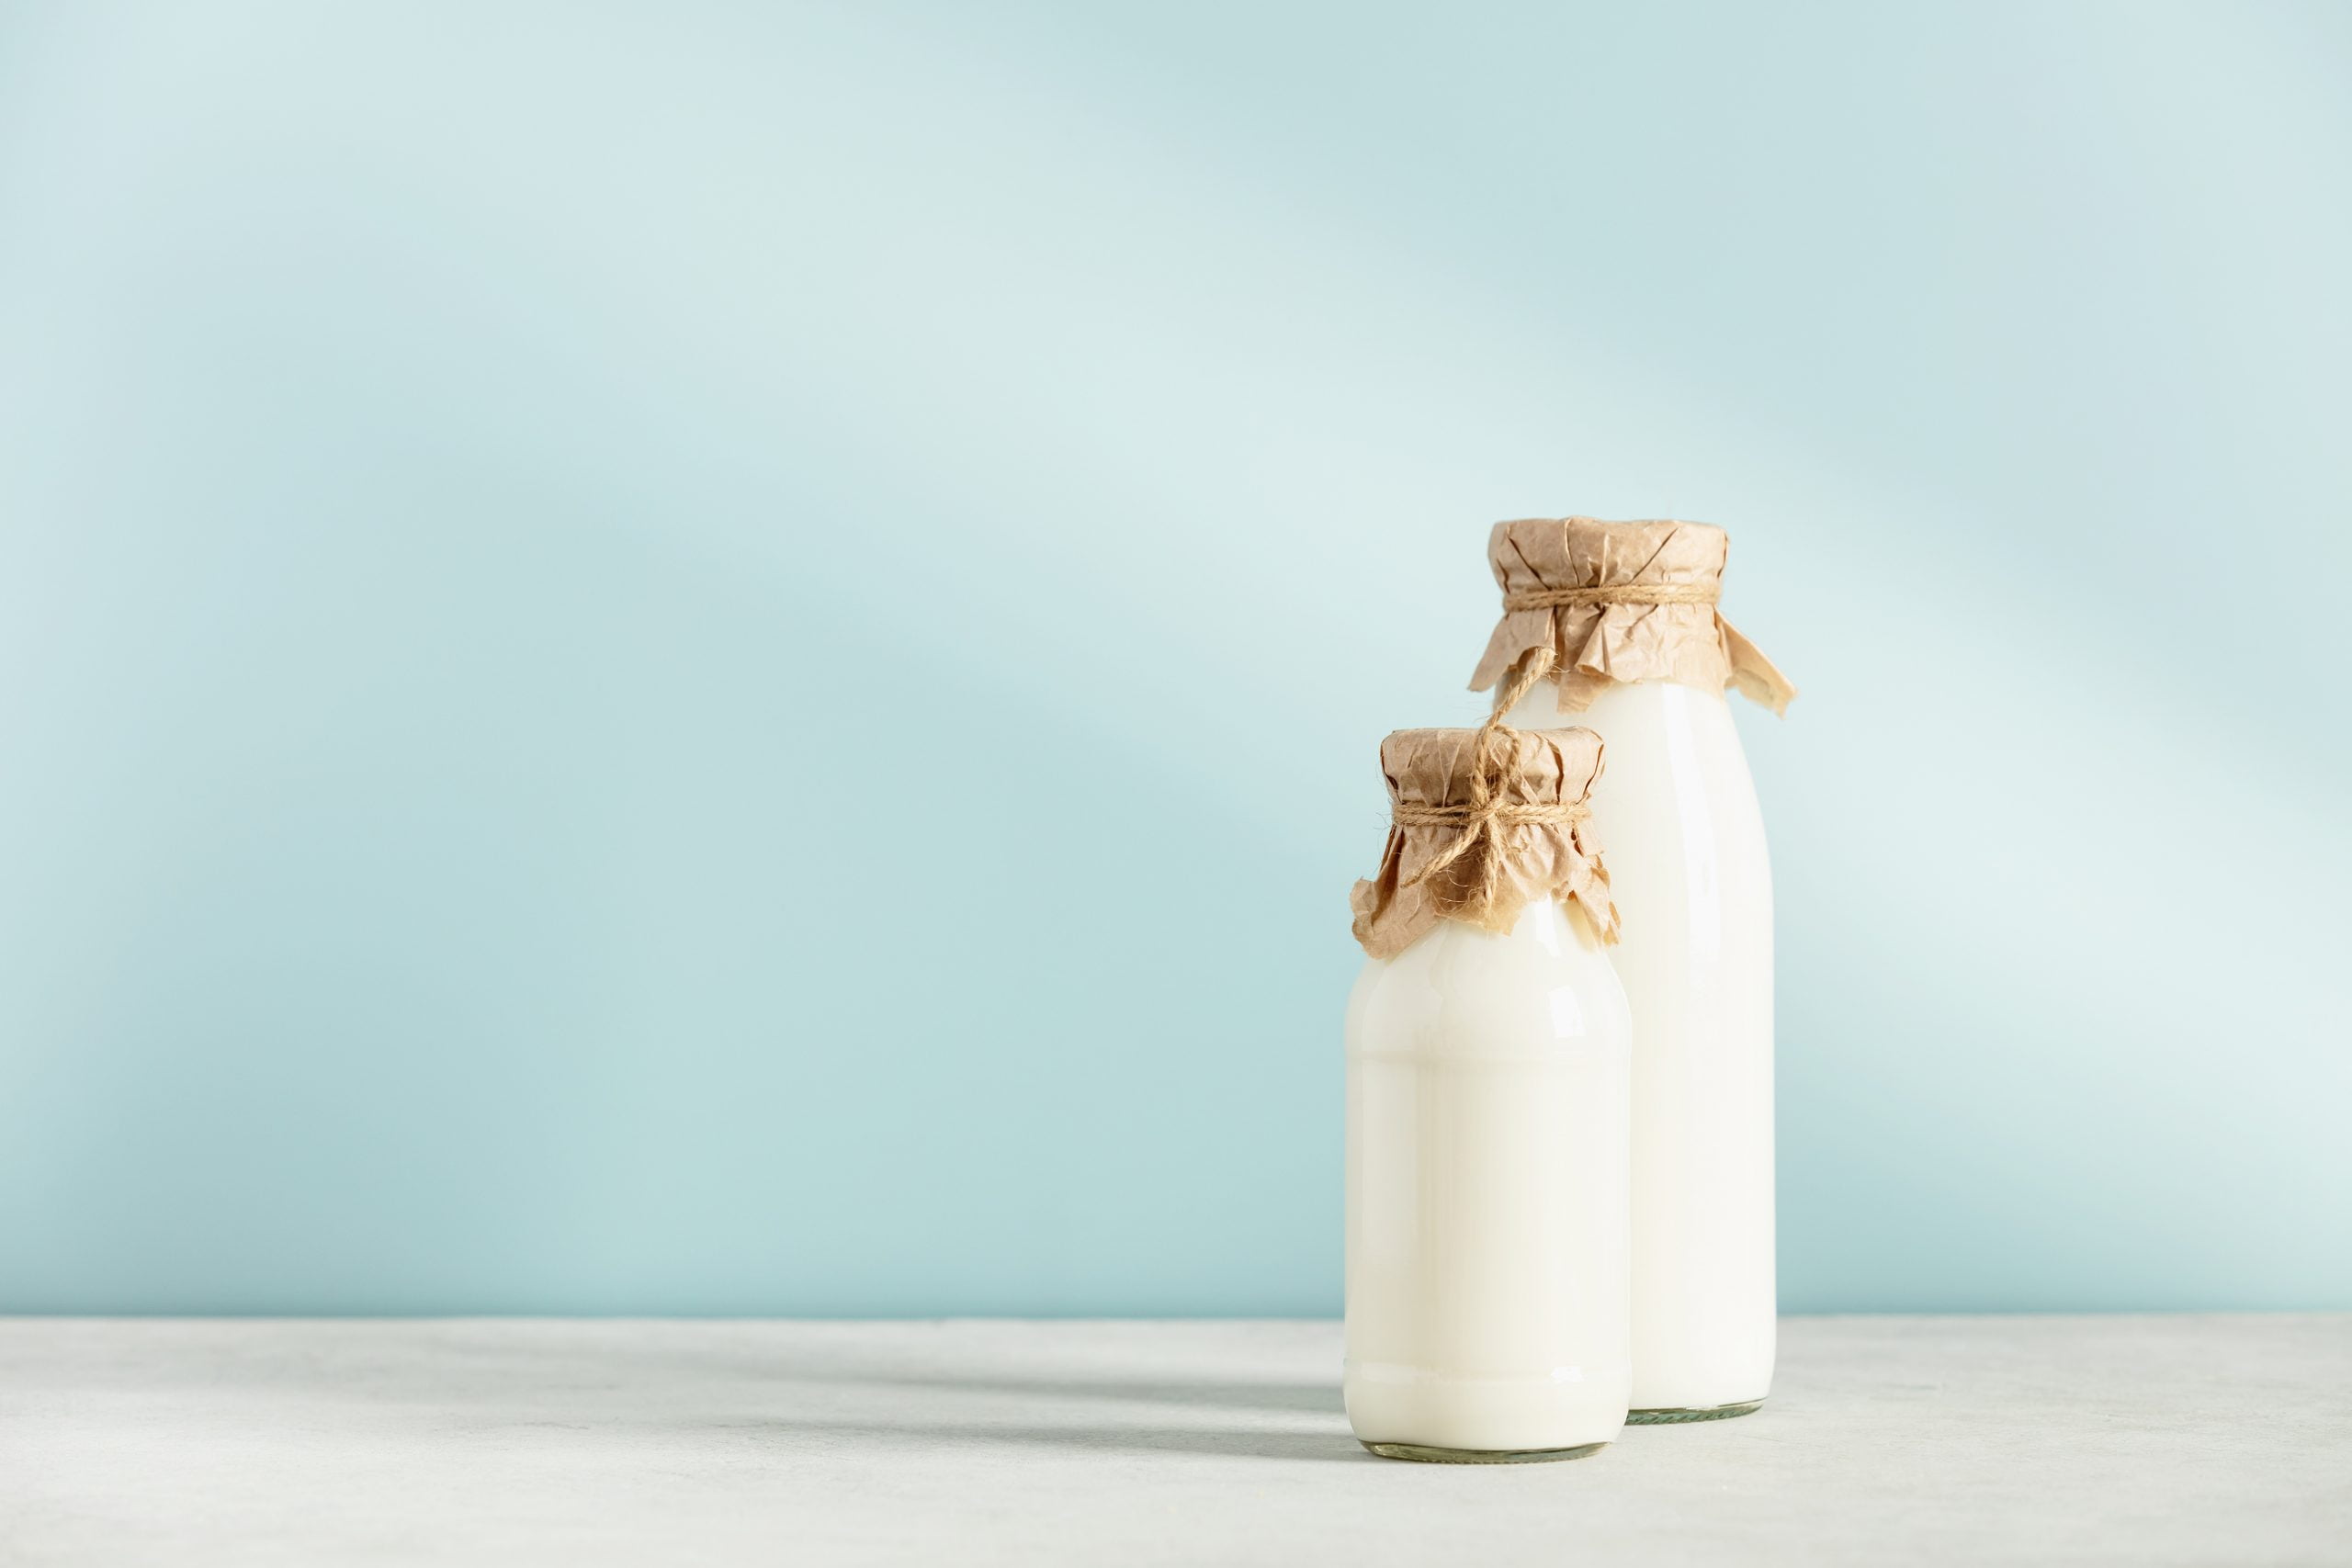 [RECIPE] How to make cultured quinoa milk in 5 easy steps